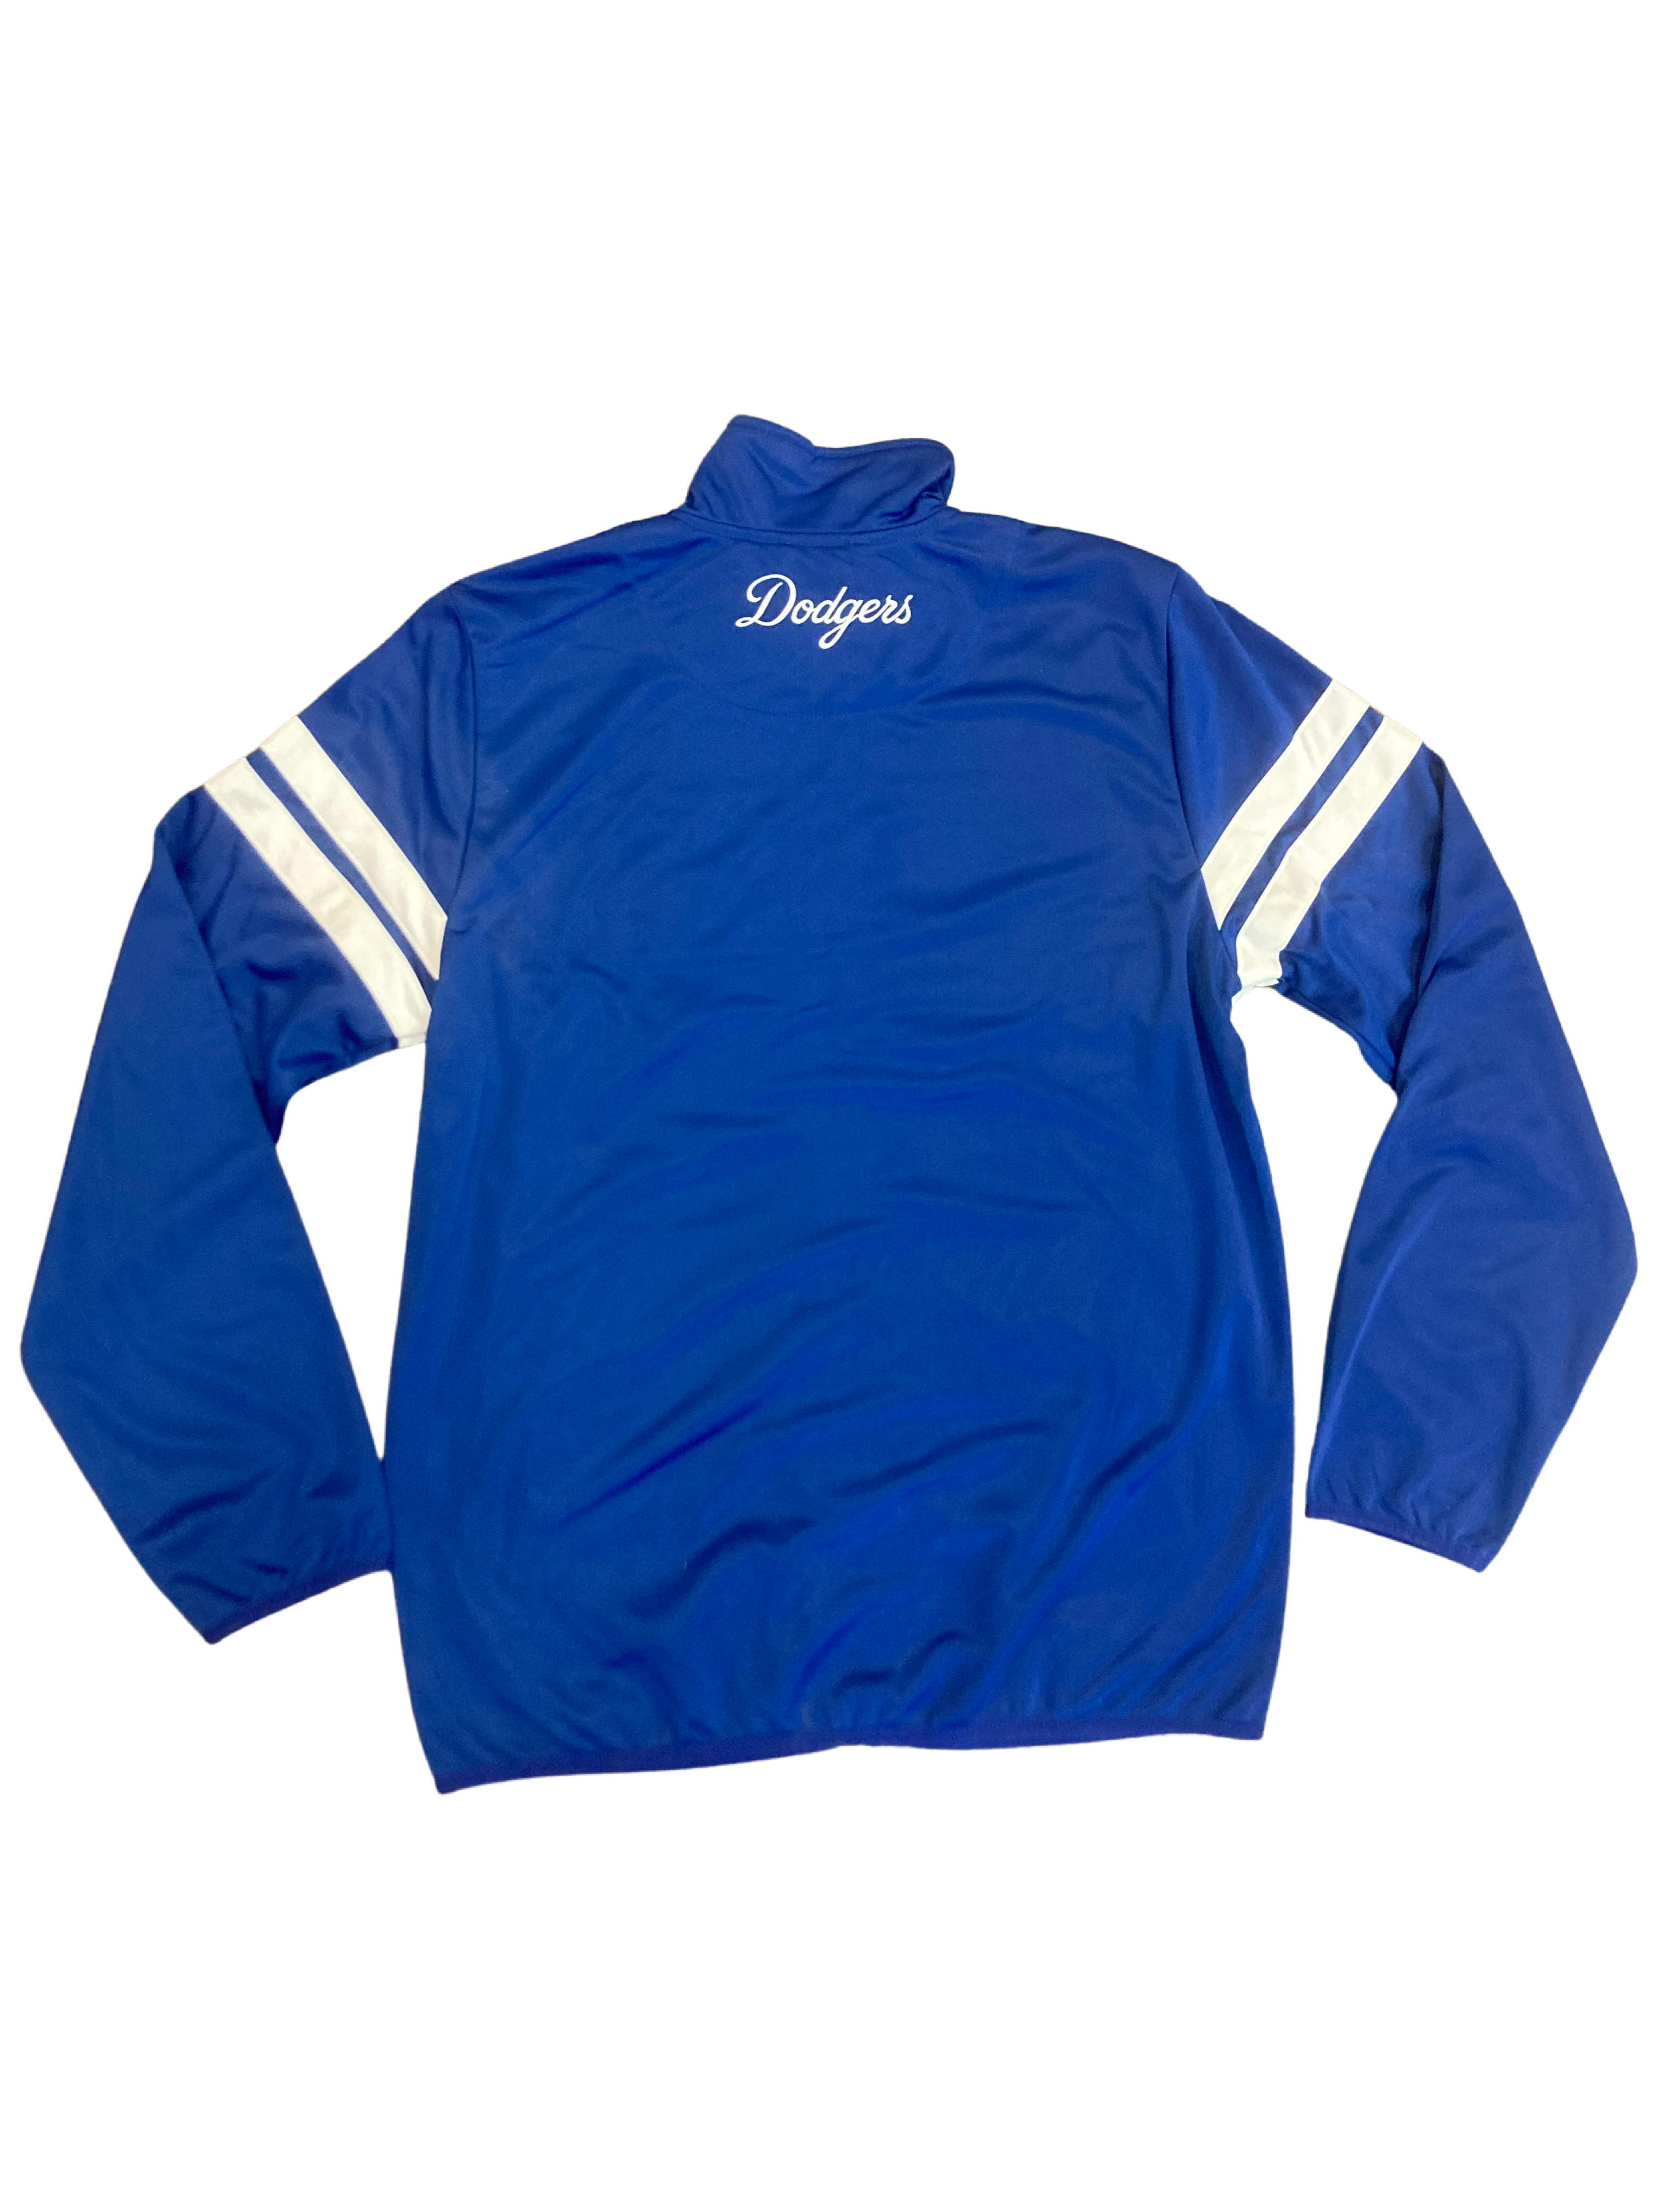 LA Dodgers G-III Full-Zip Track Jacket - Blue/Grey/White